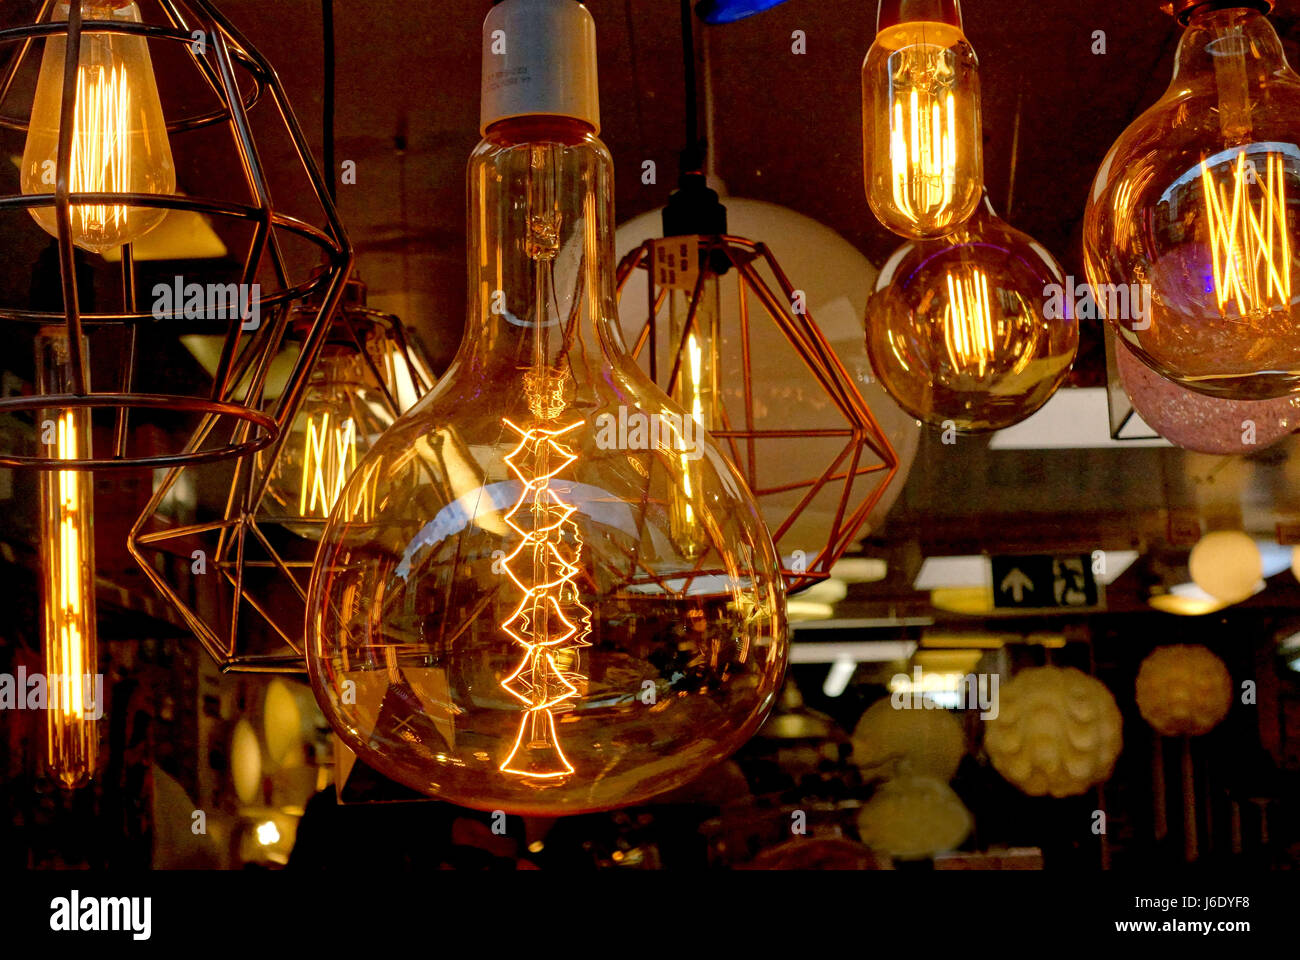 Glowing filaments in oversized light bulbs in shop window display, London Stock Photo